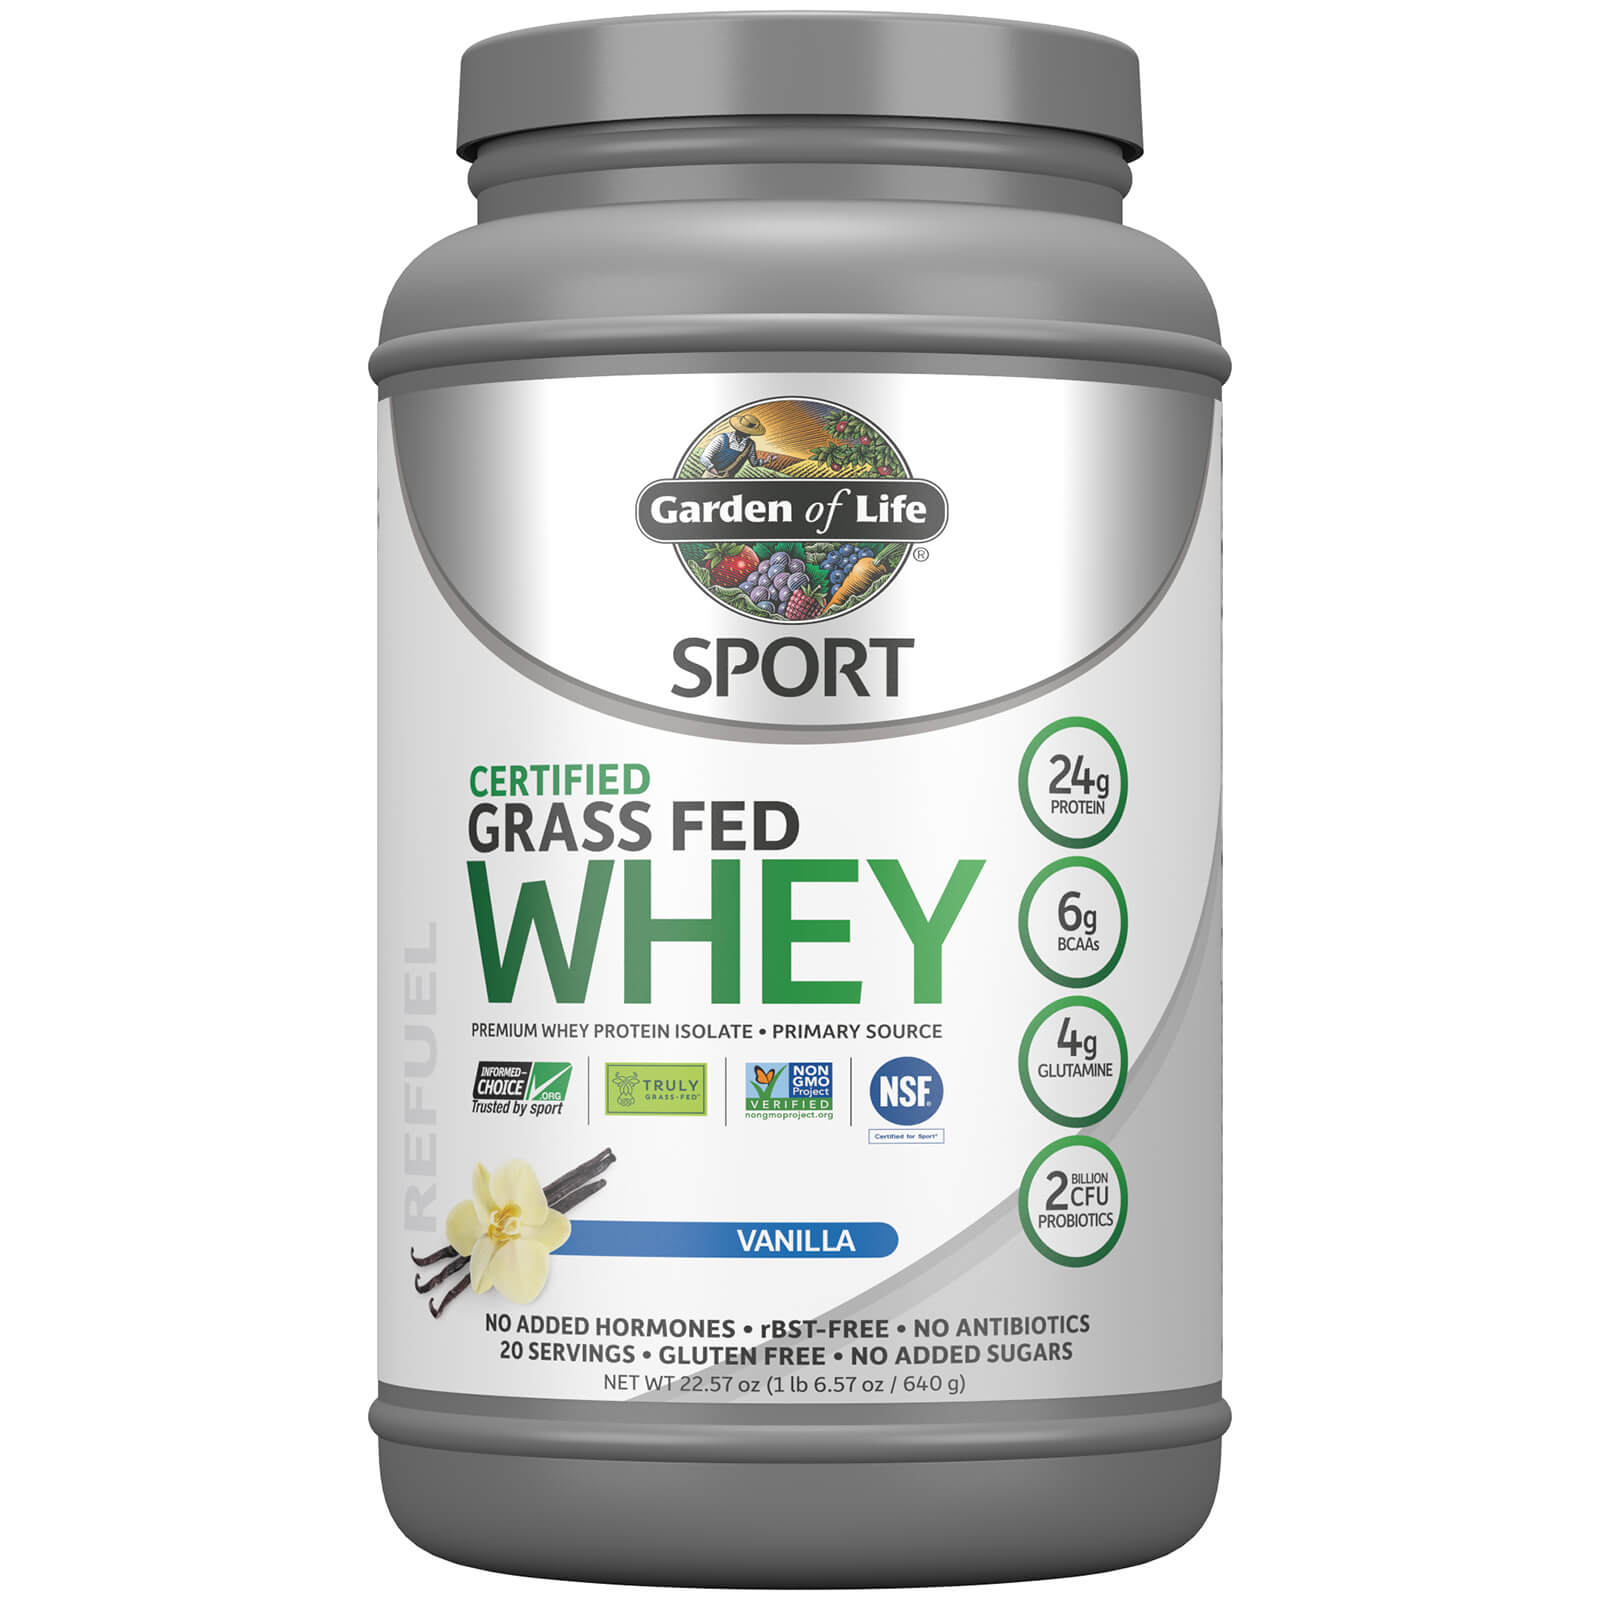 Garden of Life Sport Grass Fed Whey Vanilla 640g Powder